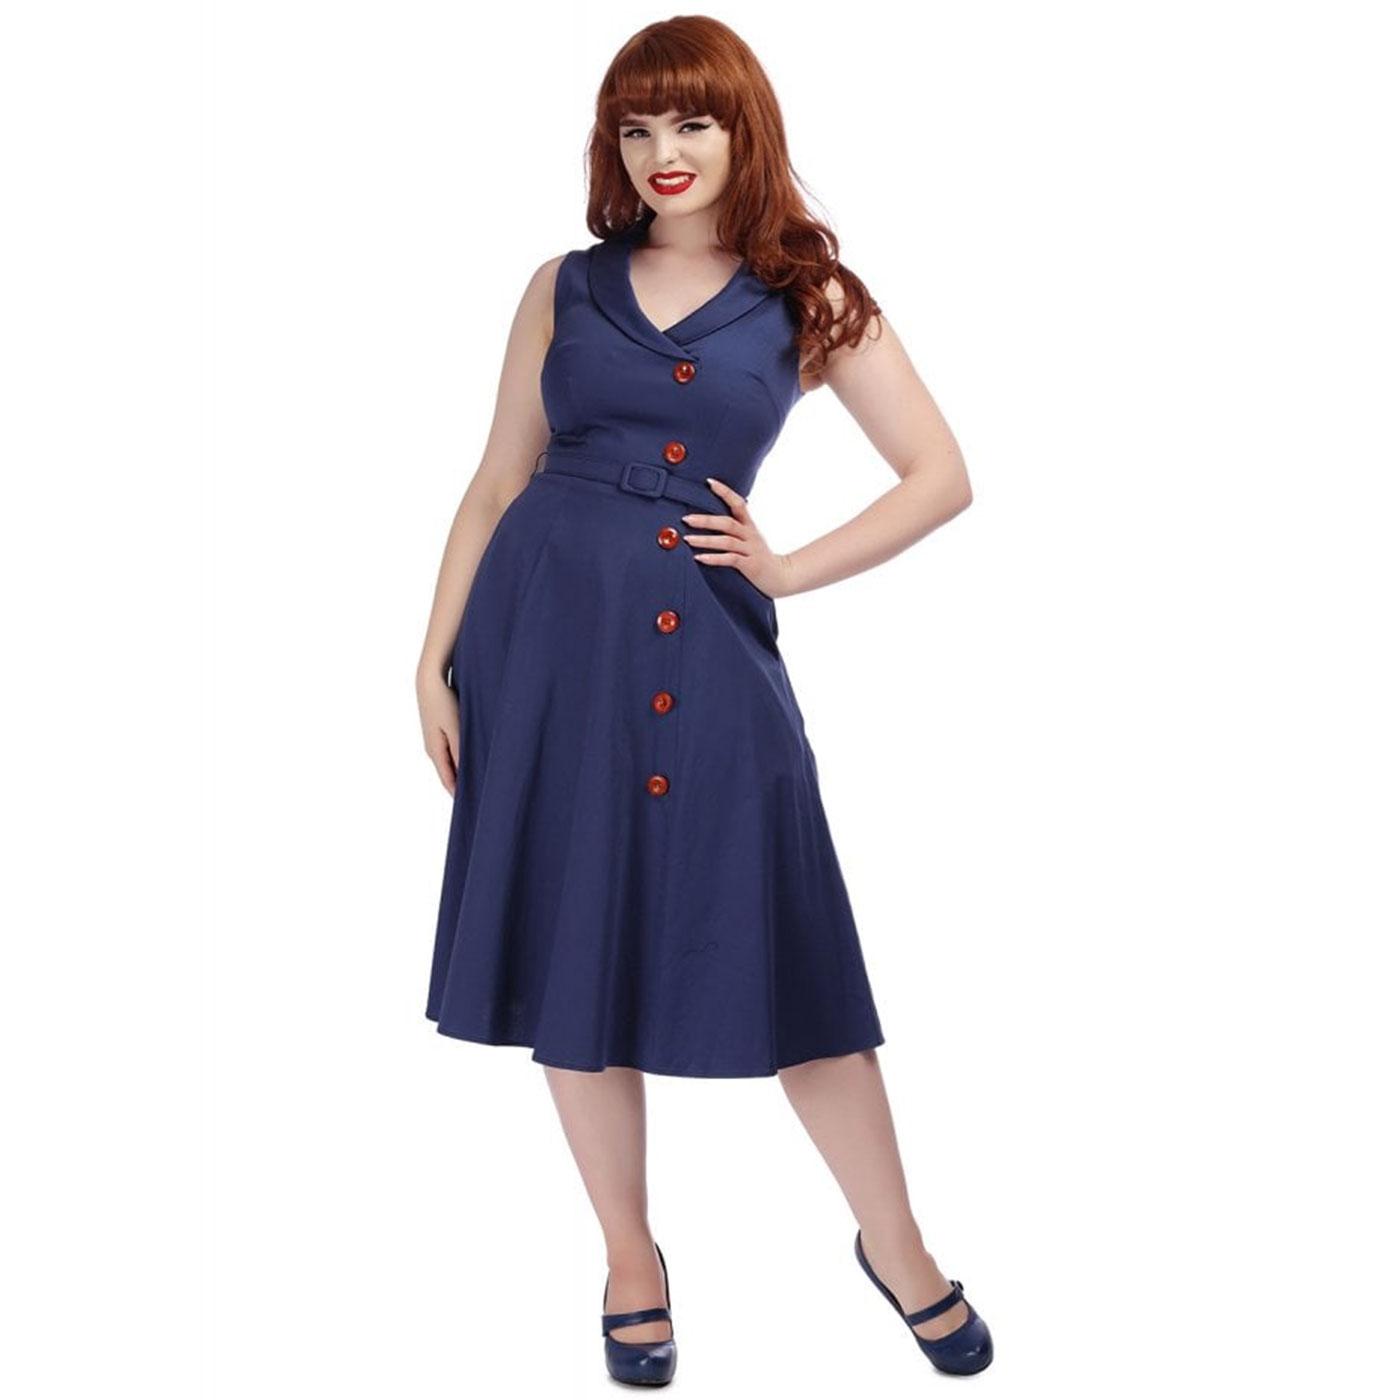 COLLECTIF Sara Retro 50s Summer Swing Dress in Navy